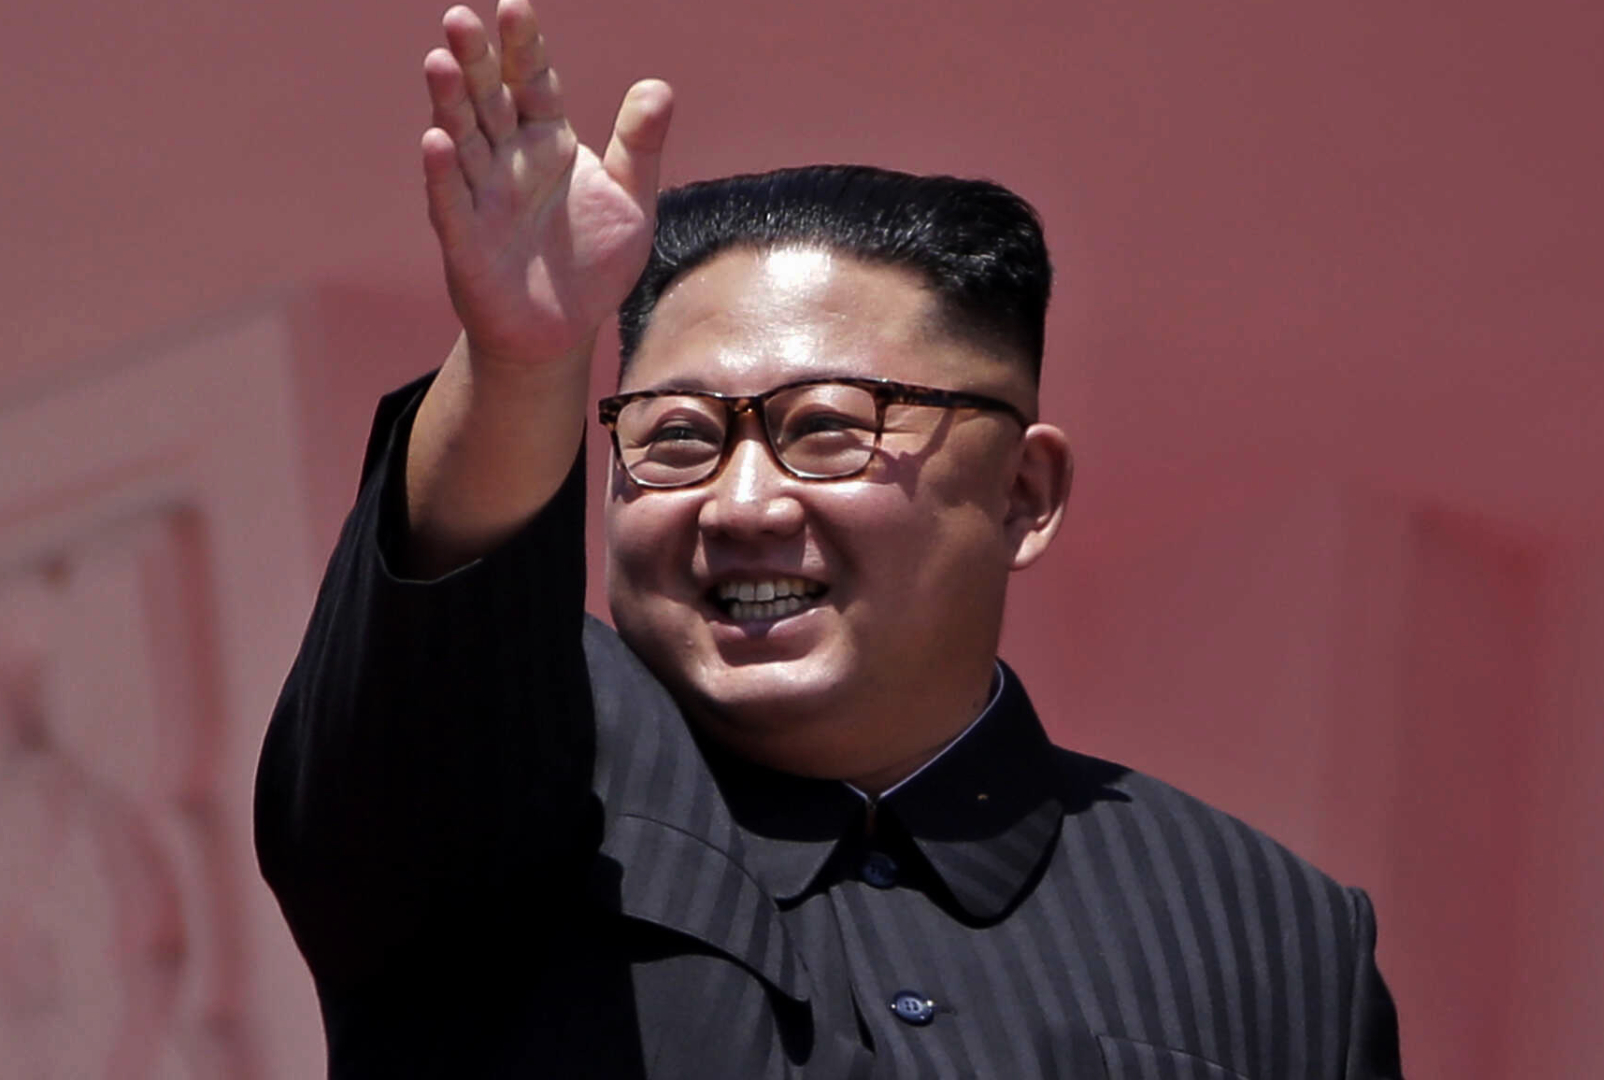 North Koreas Kim Jong Un Secretly Given Covid Vaccine From China